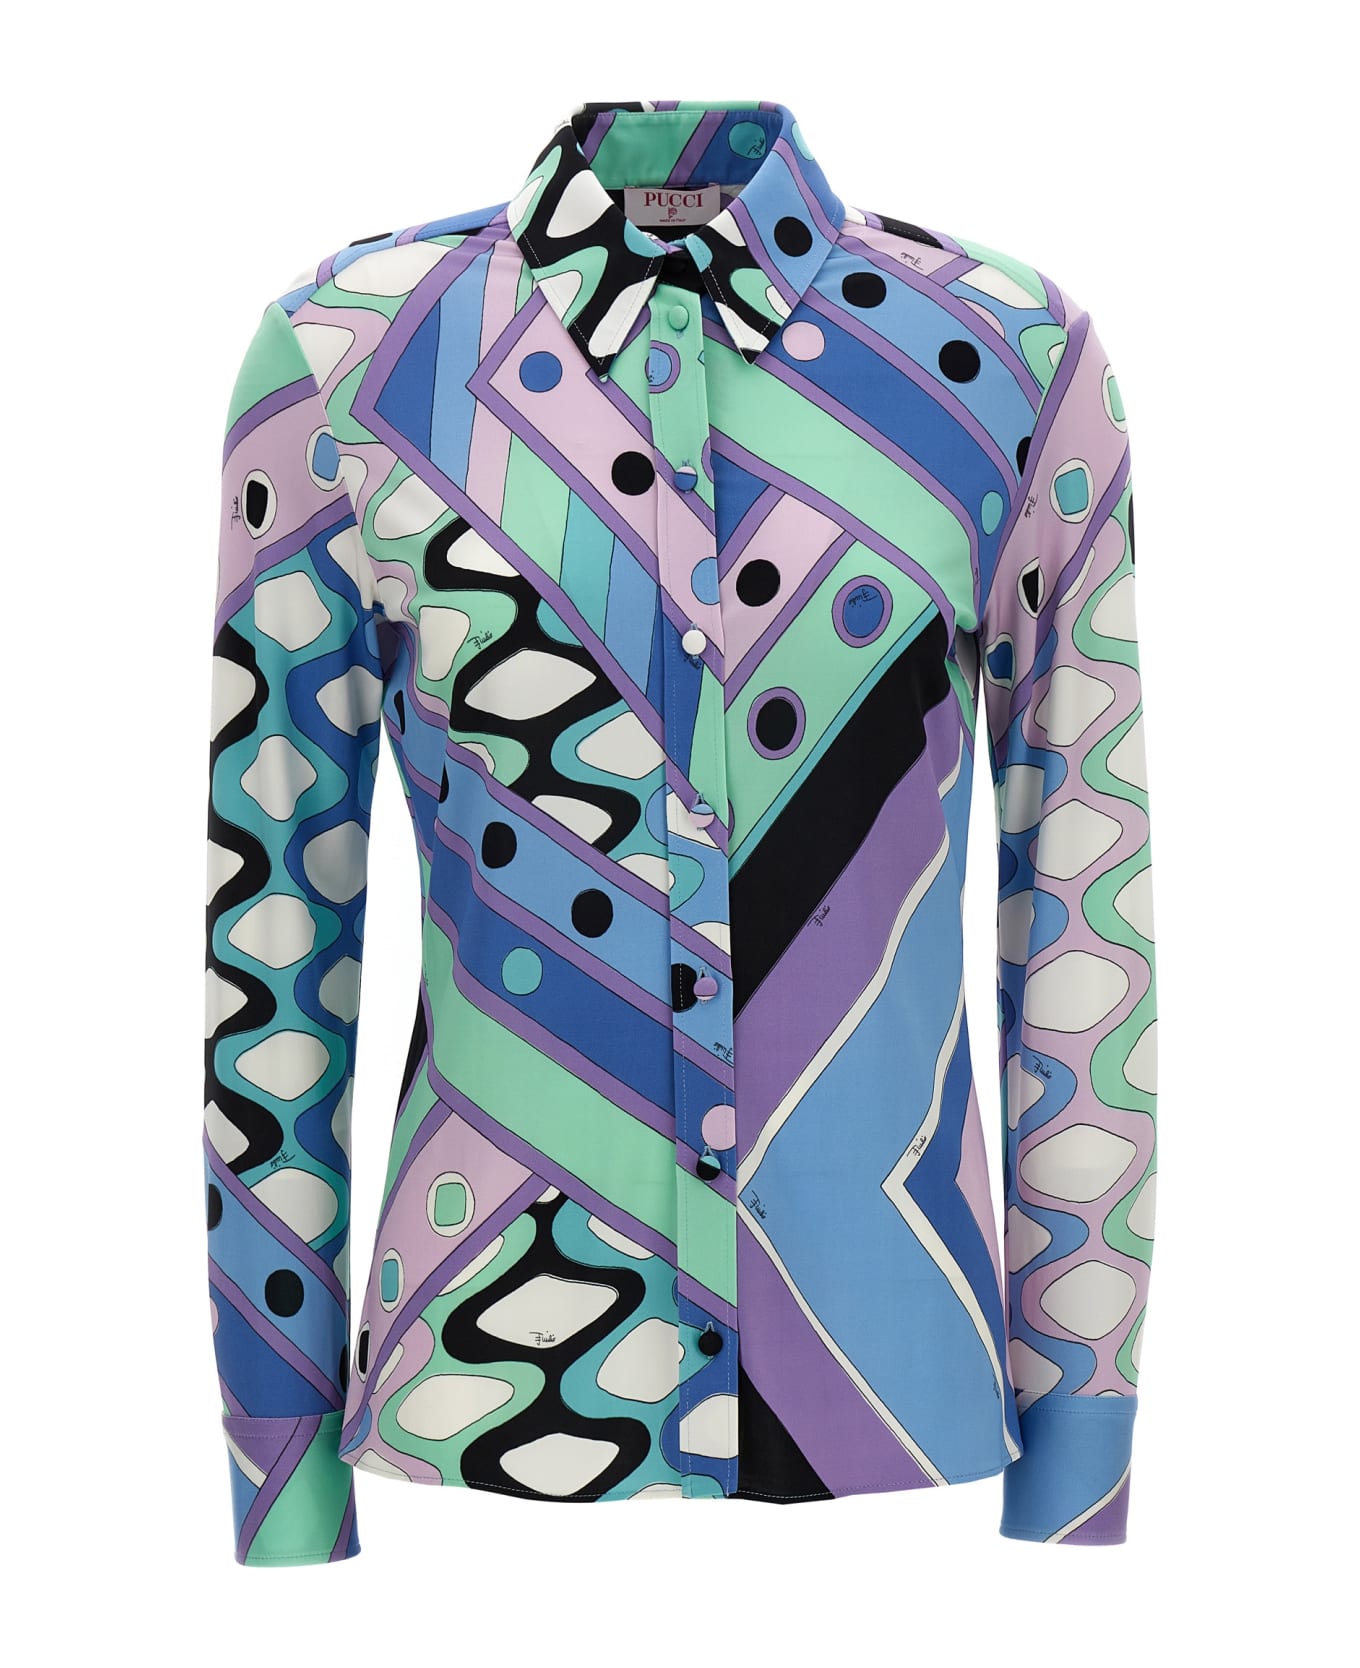 Pucci 'vivara' Shirt - Multicolor シャツ